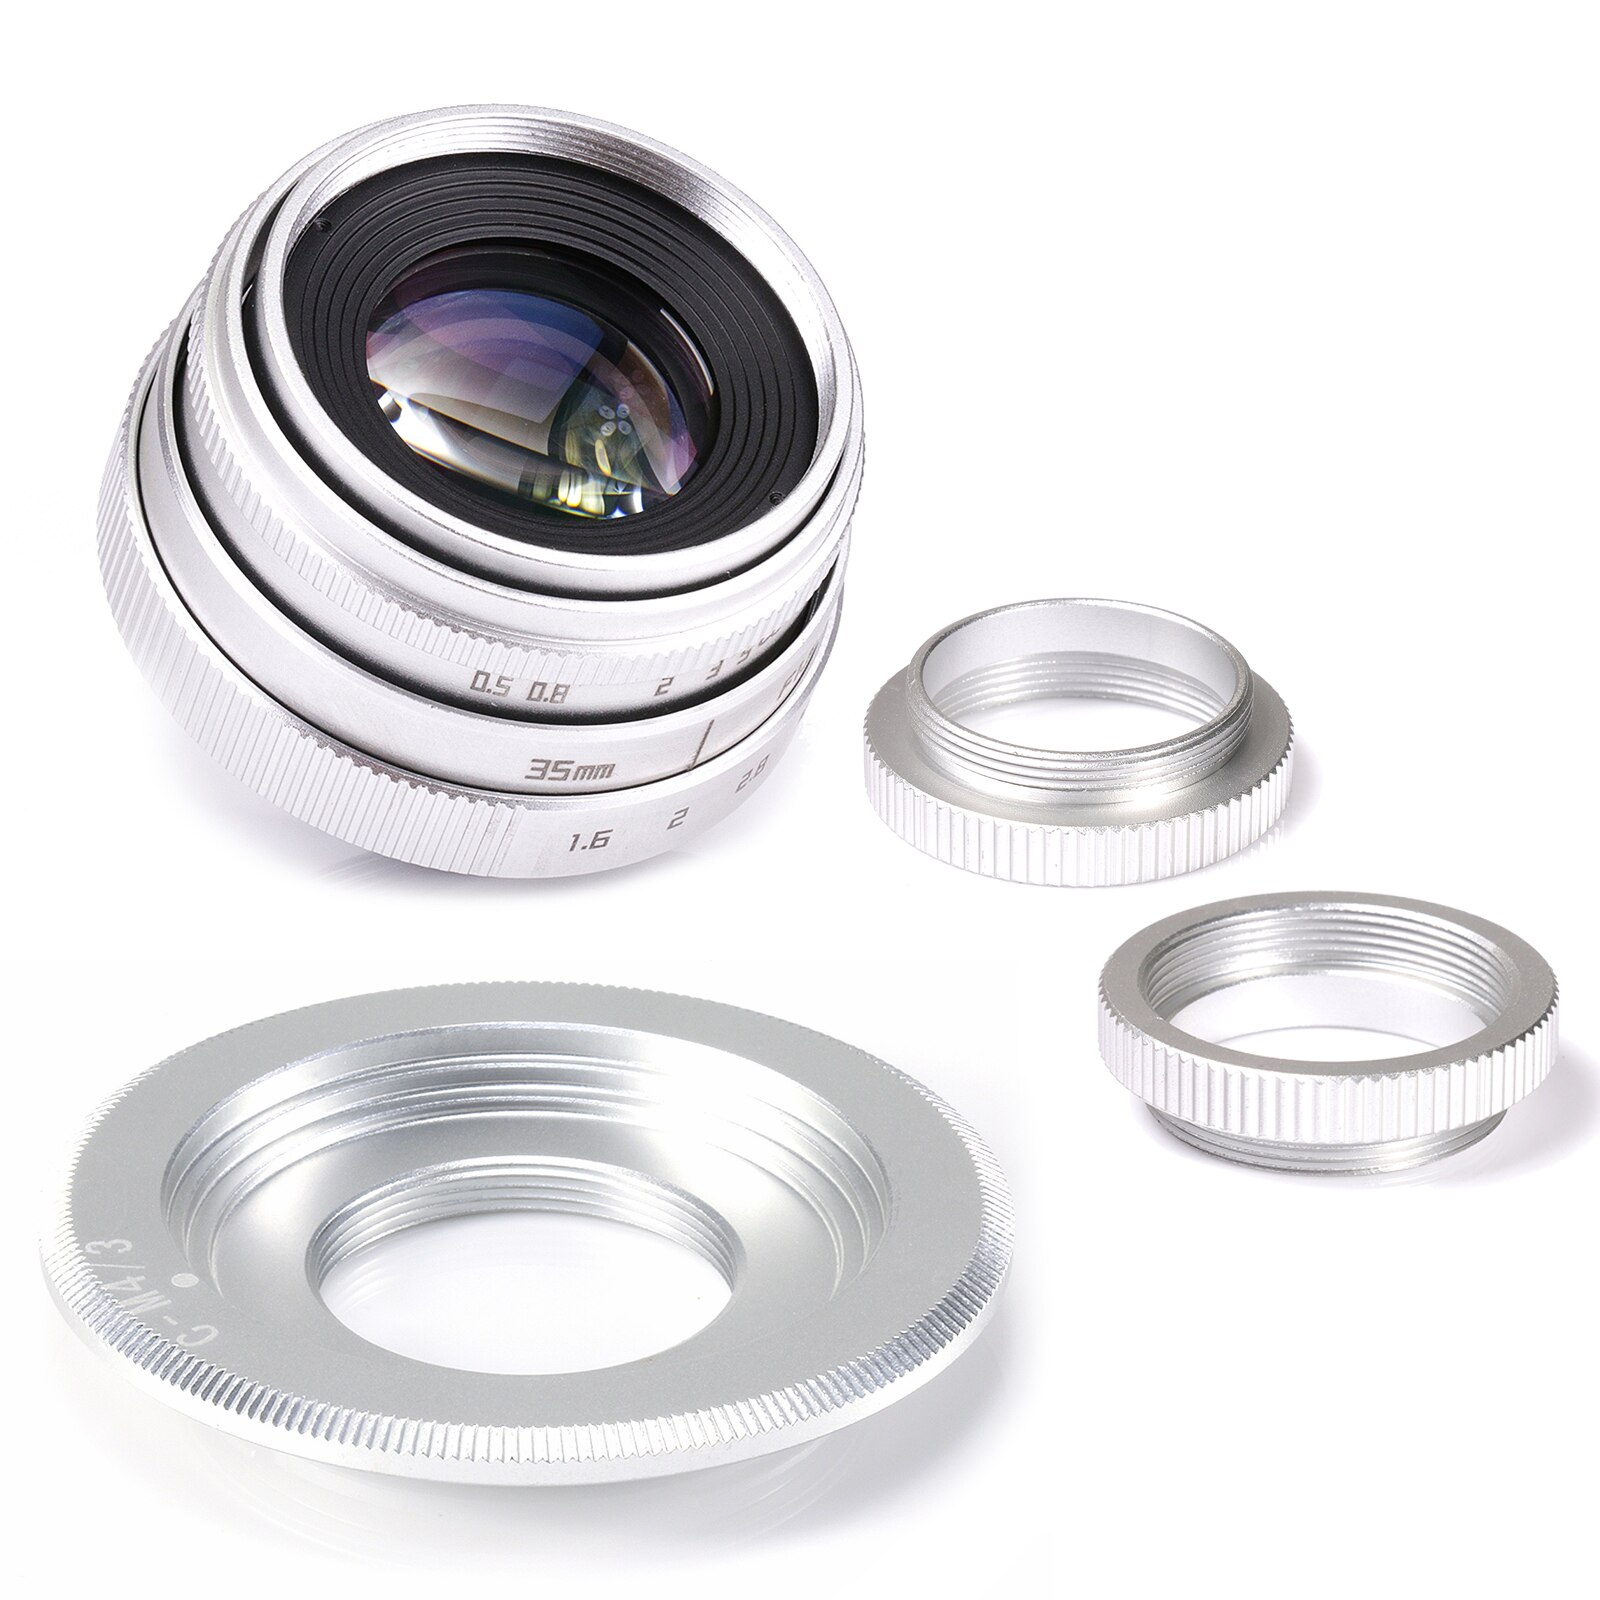 Zilver Mini 35Mm F/1.6 APS-C Cctv Lens + Adapter Ring + 2 Macro Ring Voor P Anasonic/O Lympus Micro4/3 M4/3 Mirroless Camera